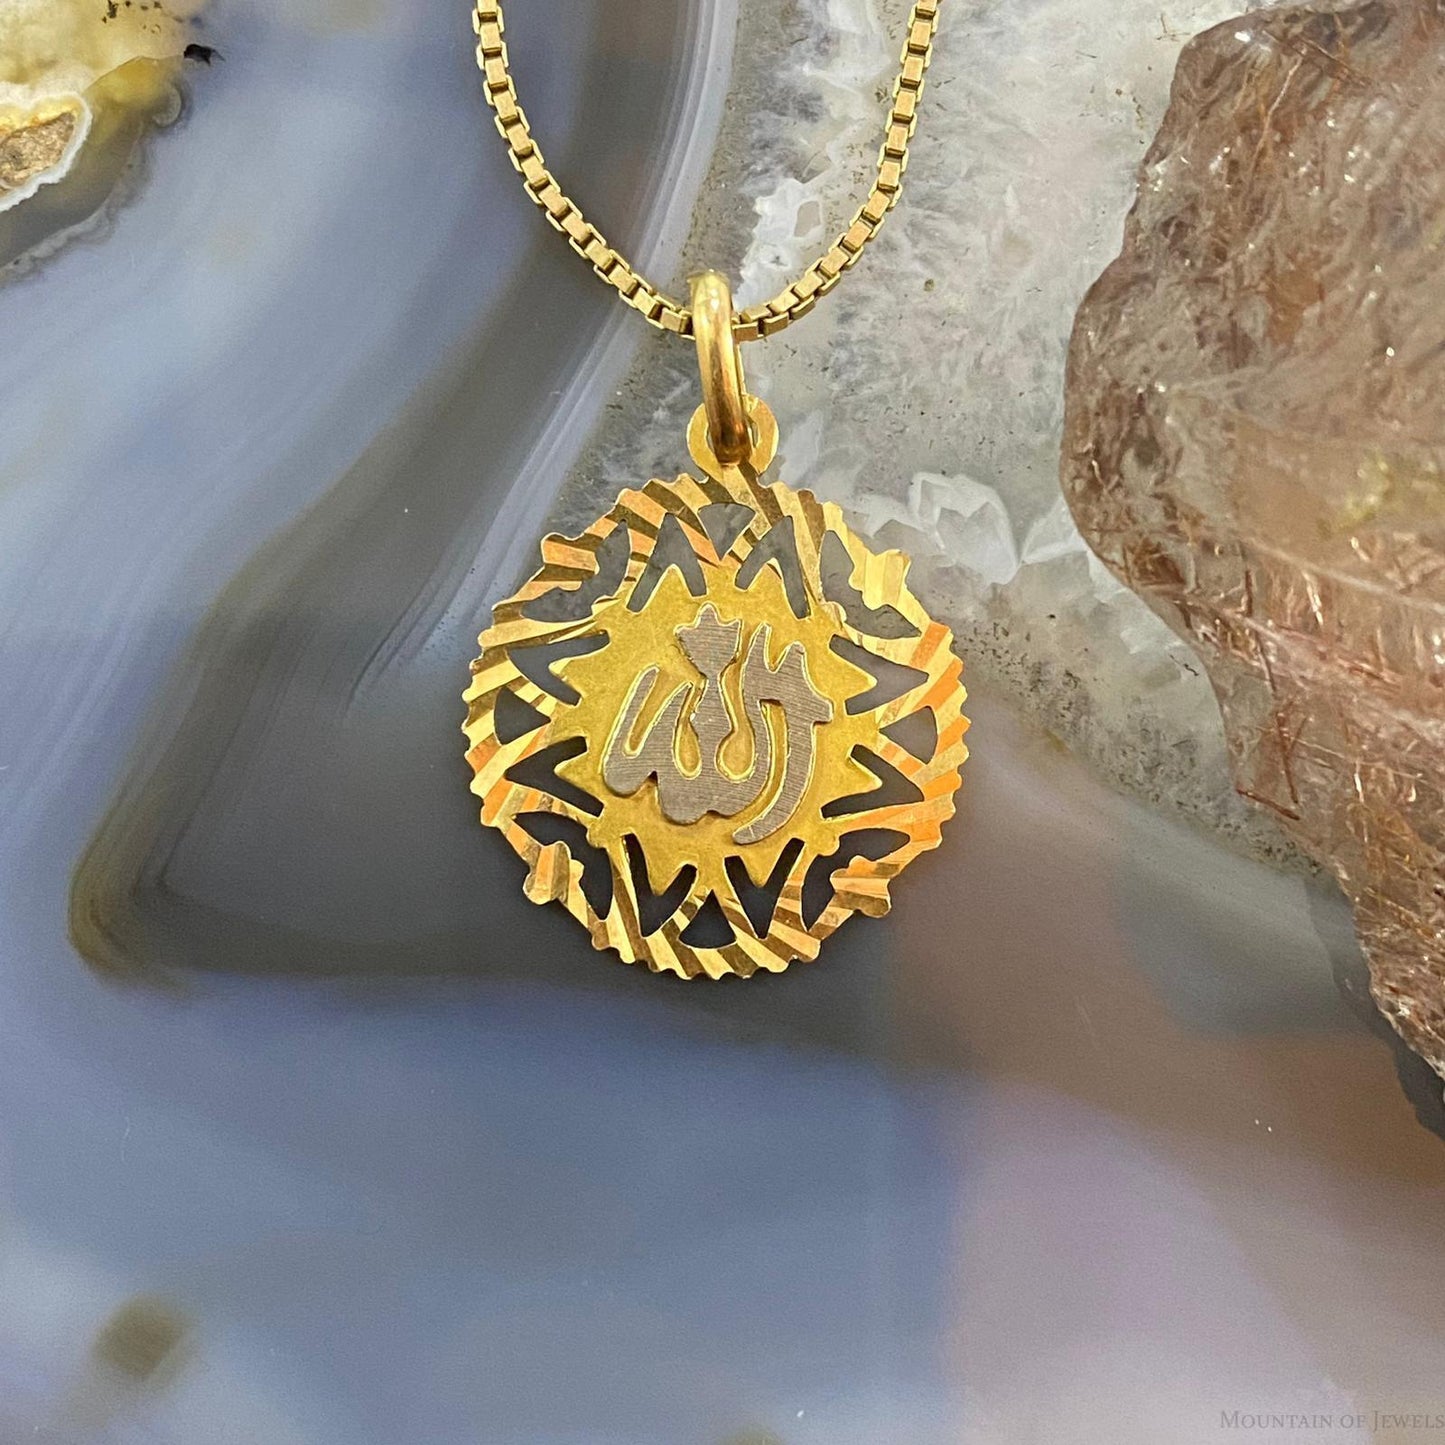 18K Yellow Gold "Allah" الله Charm Pendant For Women